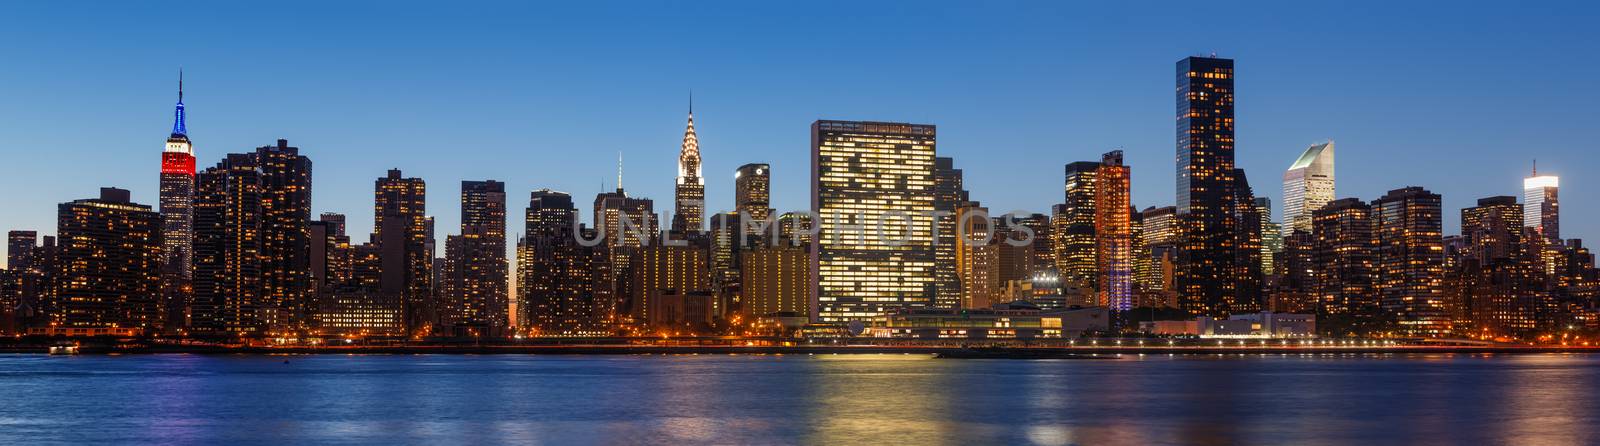 Late evening New York City skyline panorama by palinchak